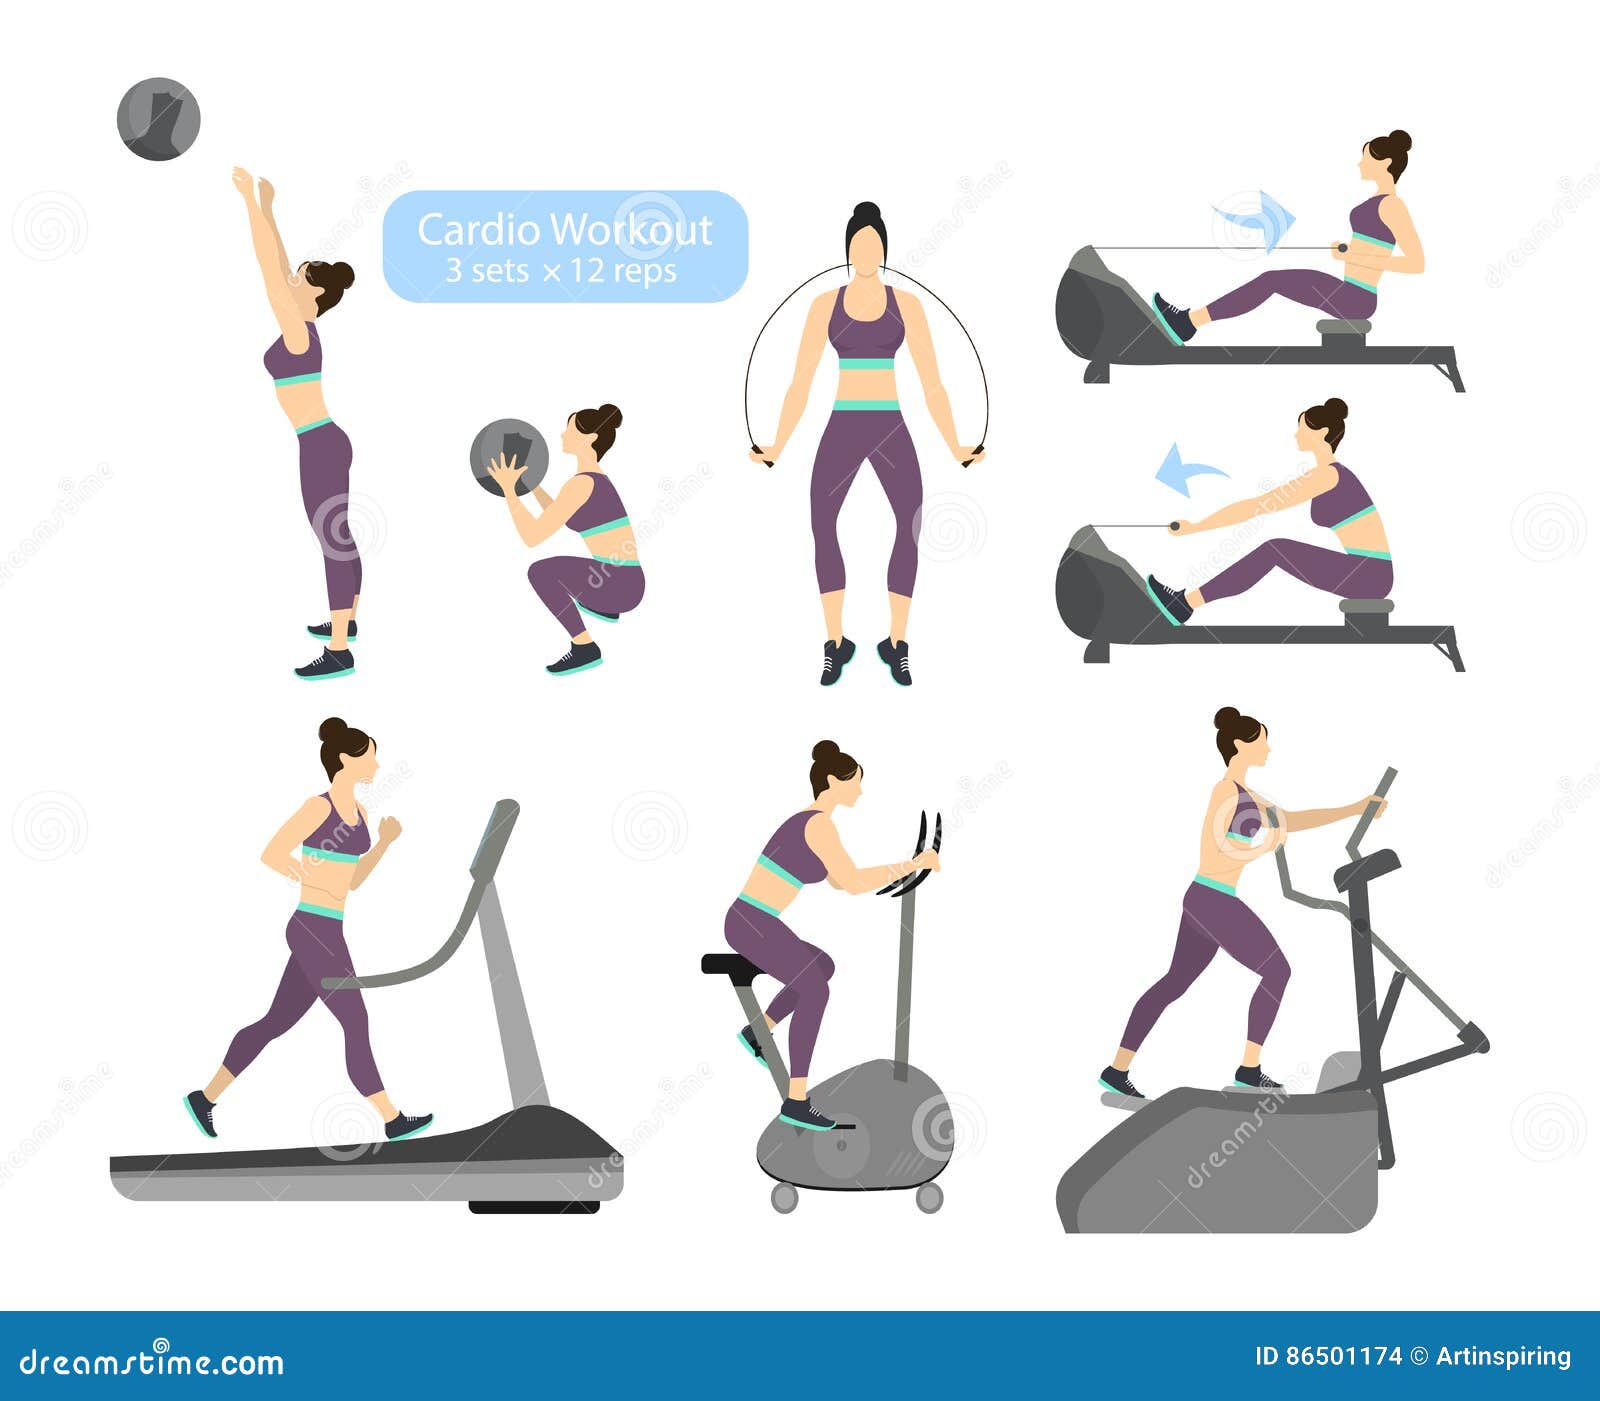 Cardio Workout Exercises. Stock Vector. Illustration Of Cardio - 86501174